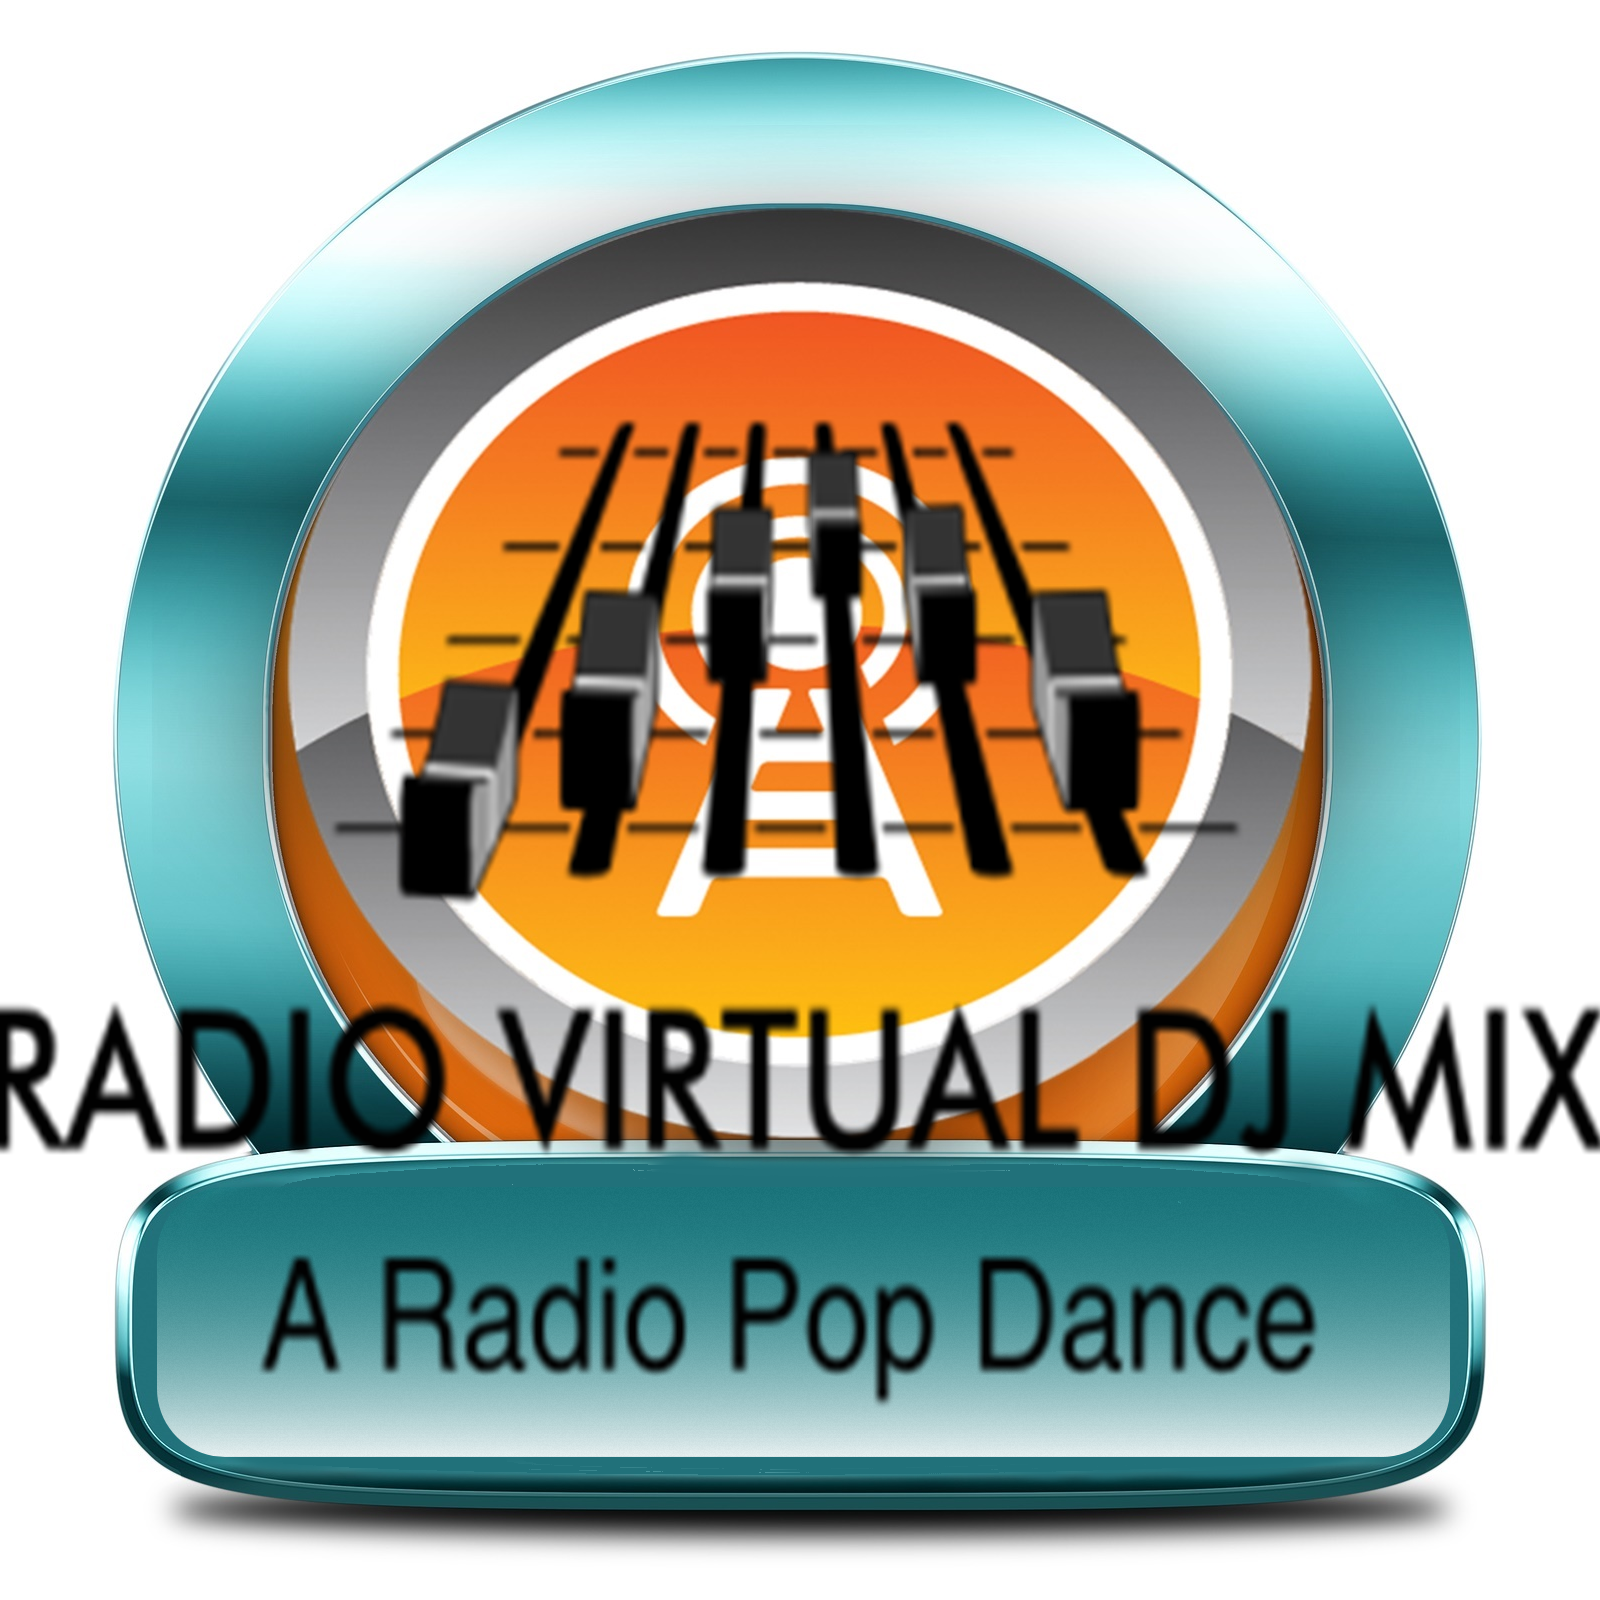 RADIO VIRTUAL DJ MIX HD